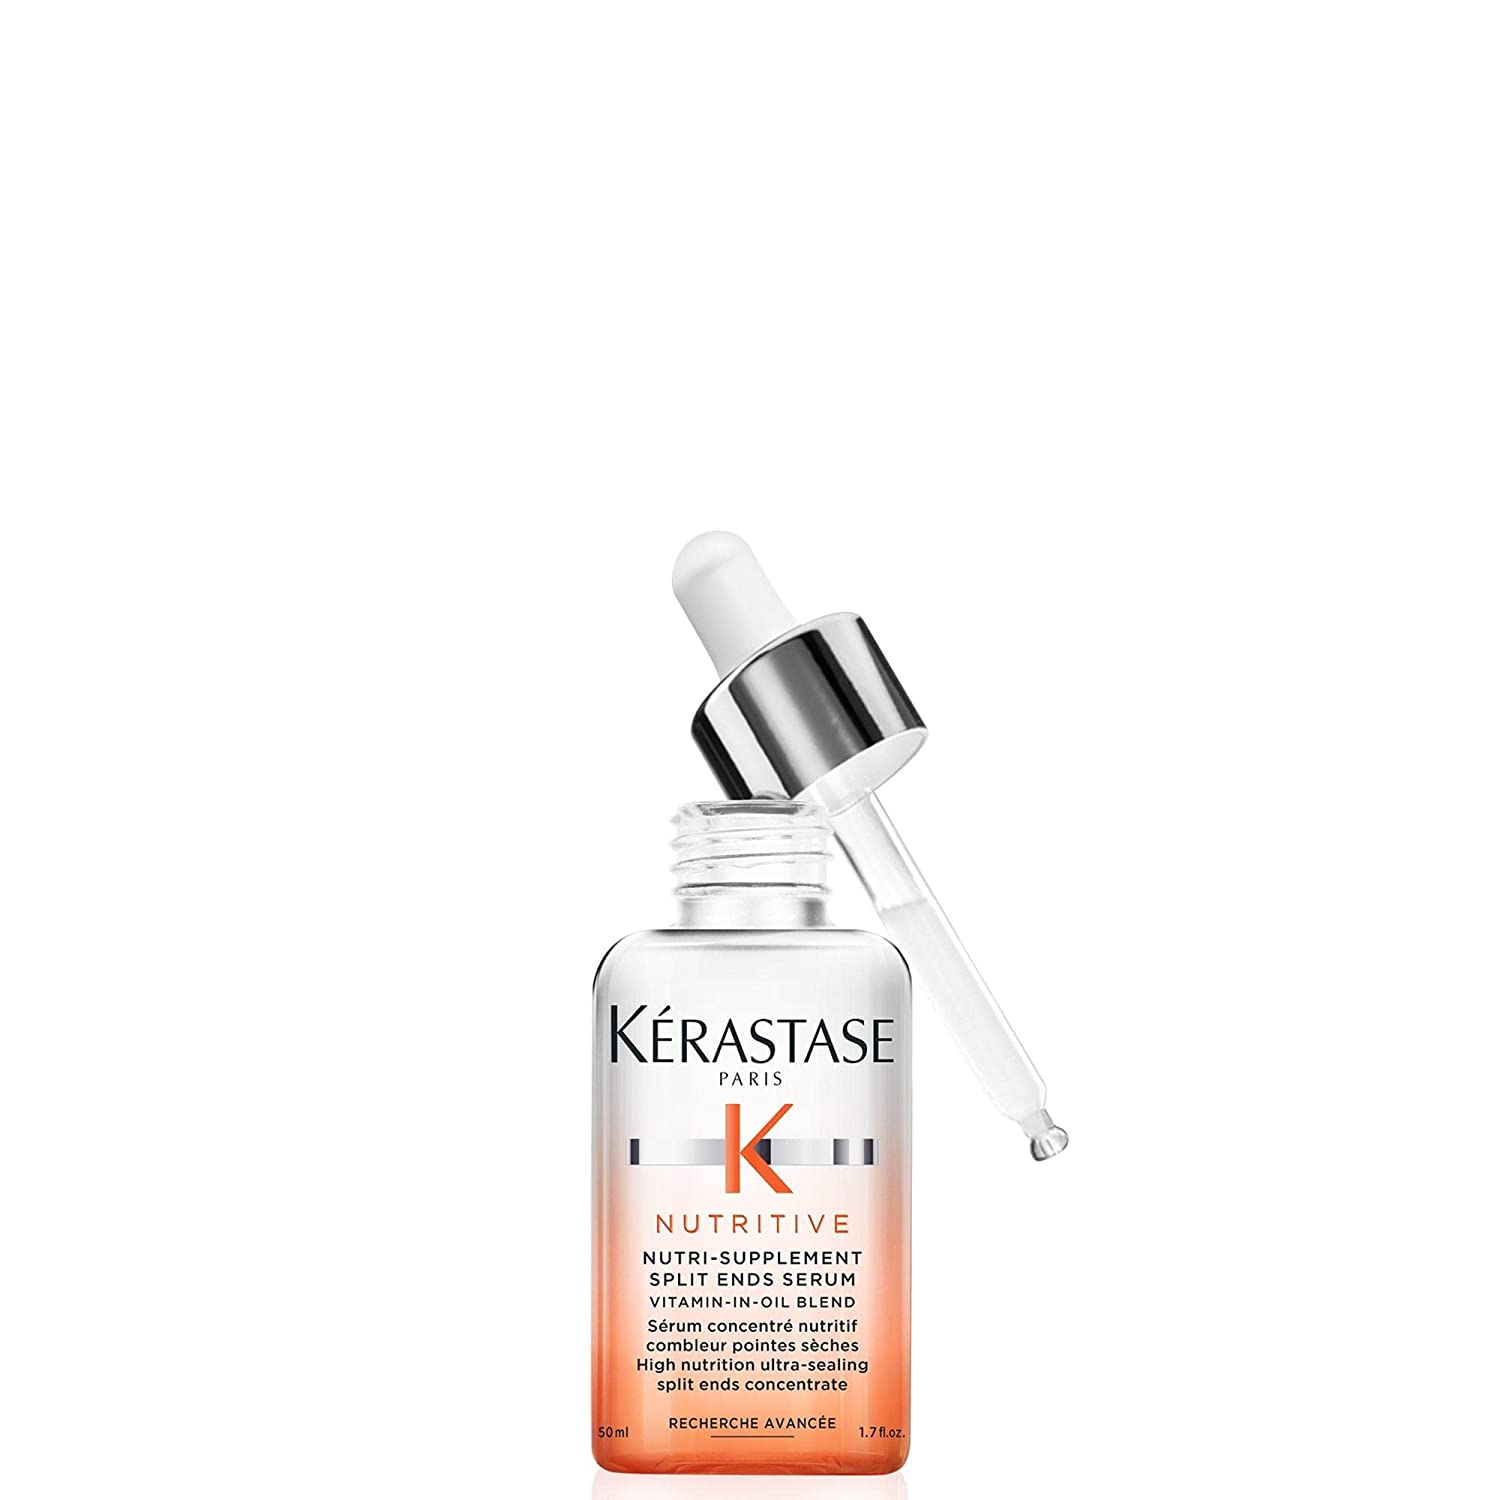 Kérastase Nutritive Serum for Damaged Hair Tips, Moisturising Effect Against Hair Breakage and Frizz, No Parabens, Nutri Supplement Split Ends Serum, 50 ml